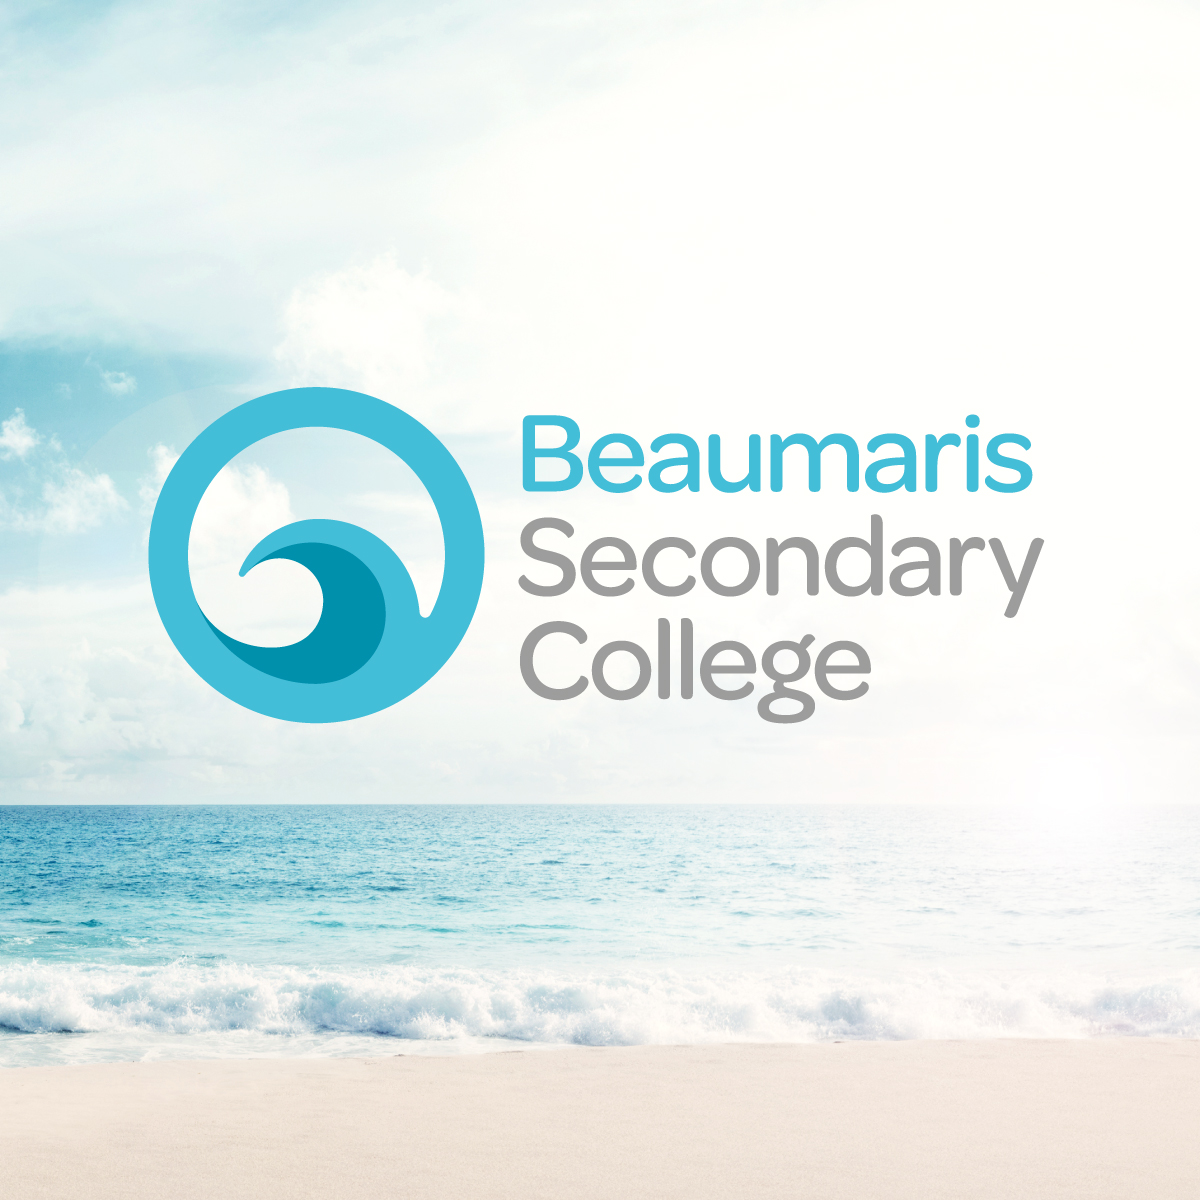 Beaumaris Secondary College Brand Identity Design